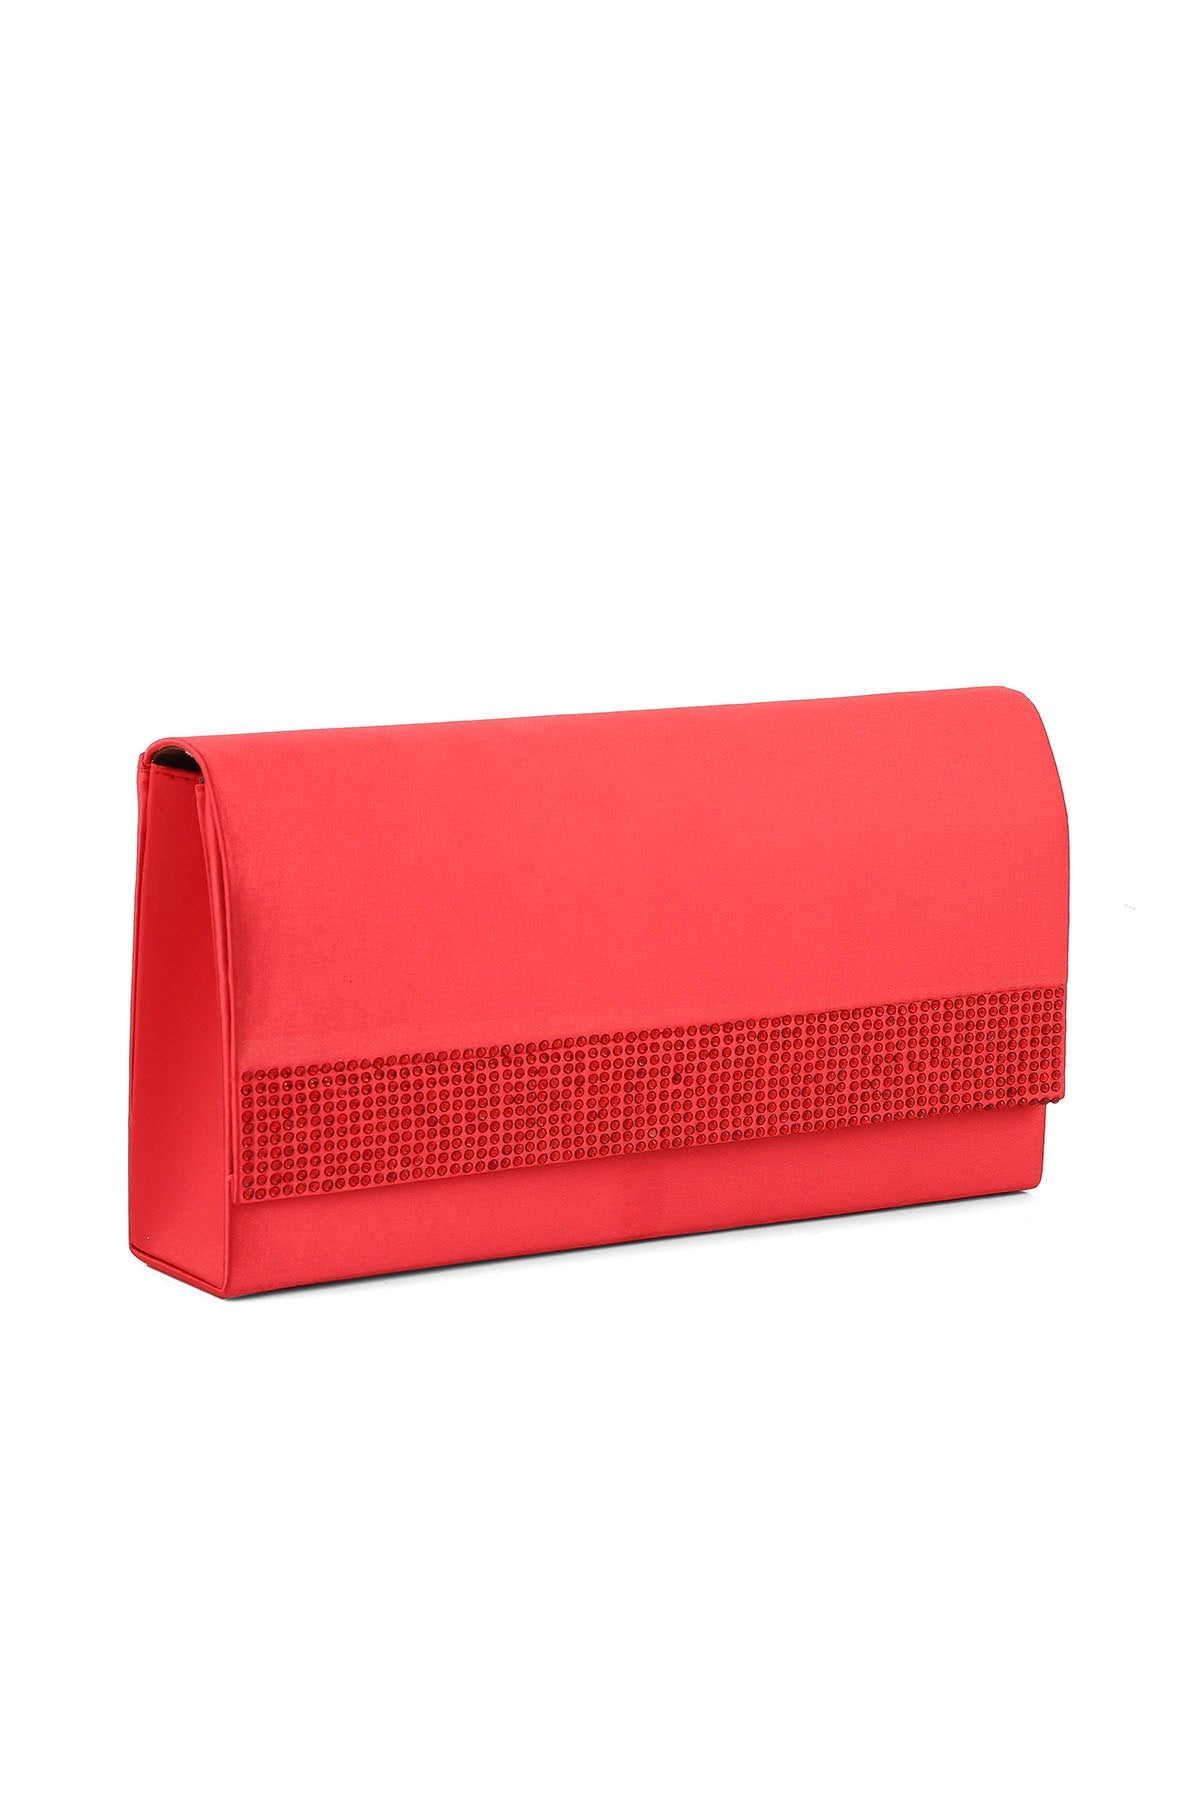 Flap Shoulder Bags B21583-Red